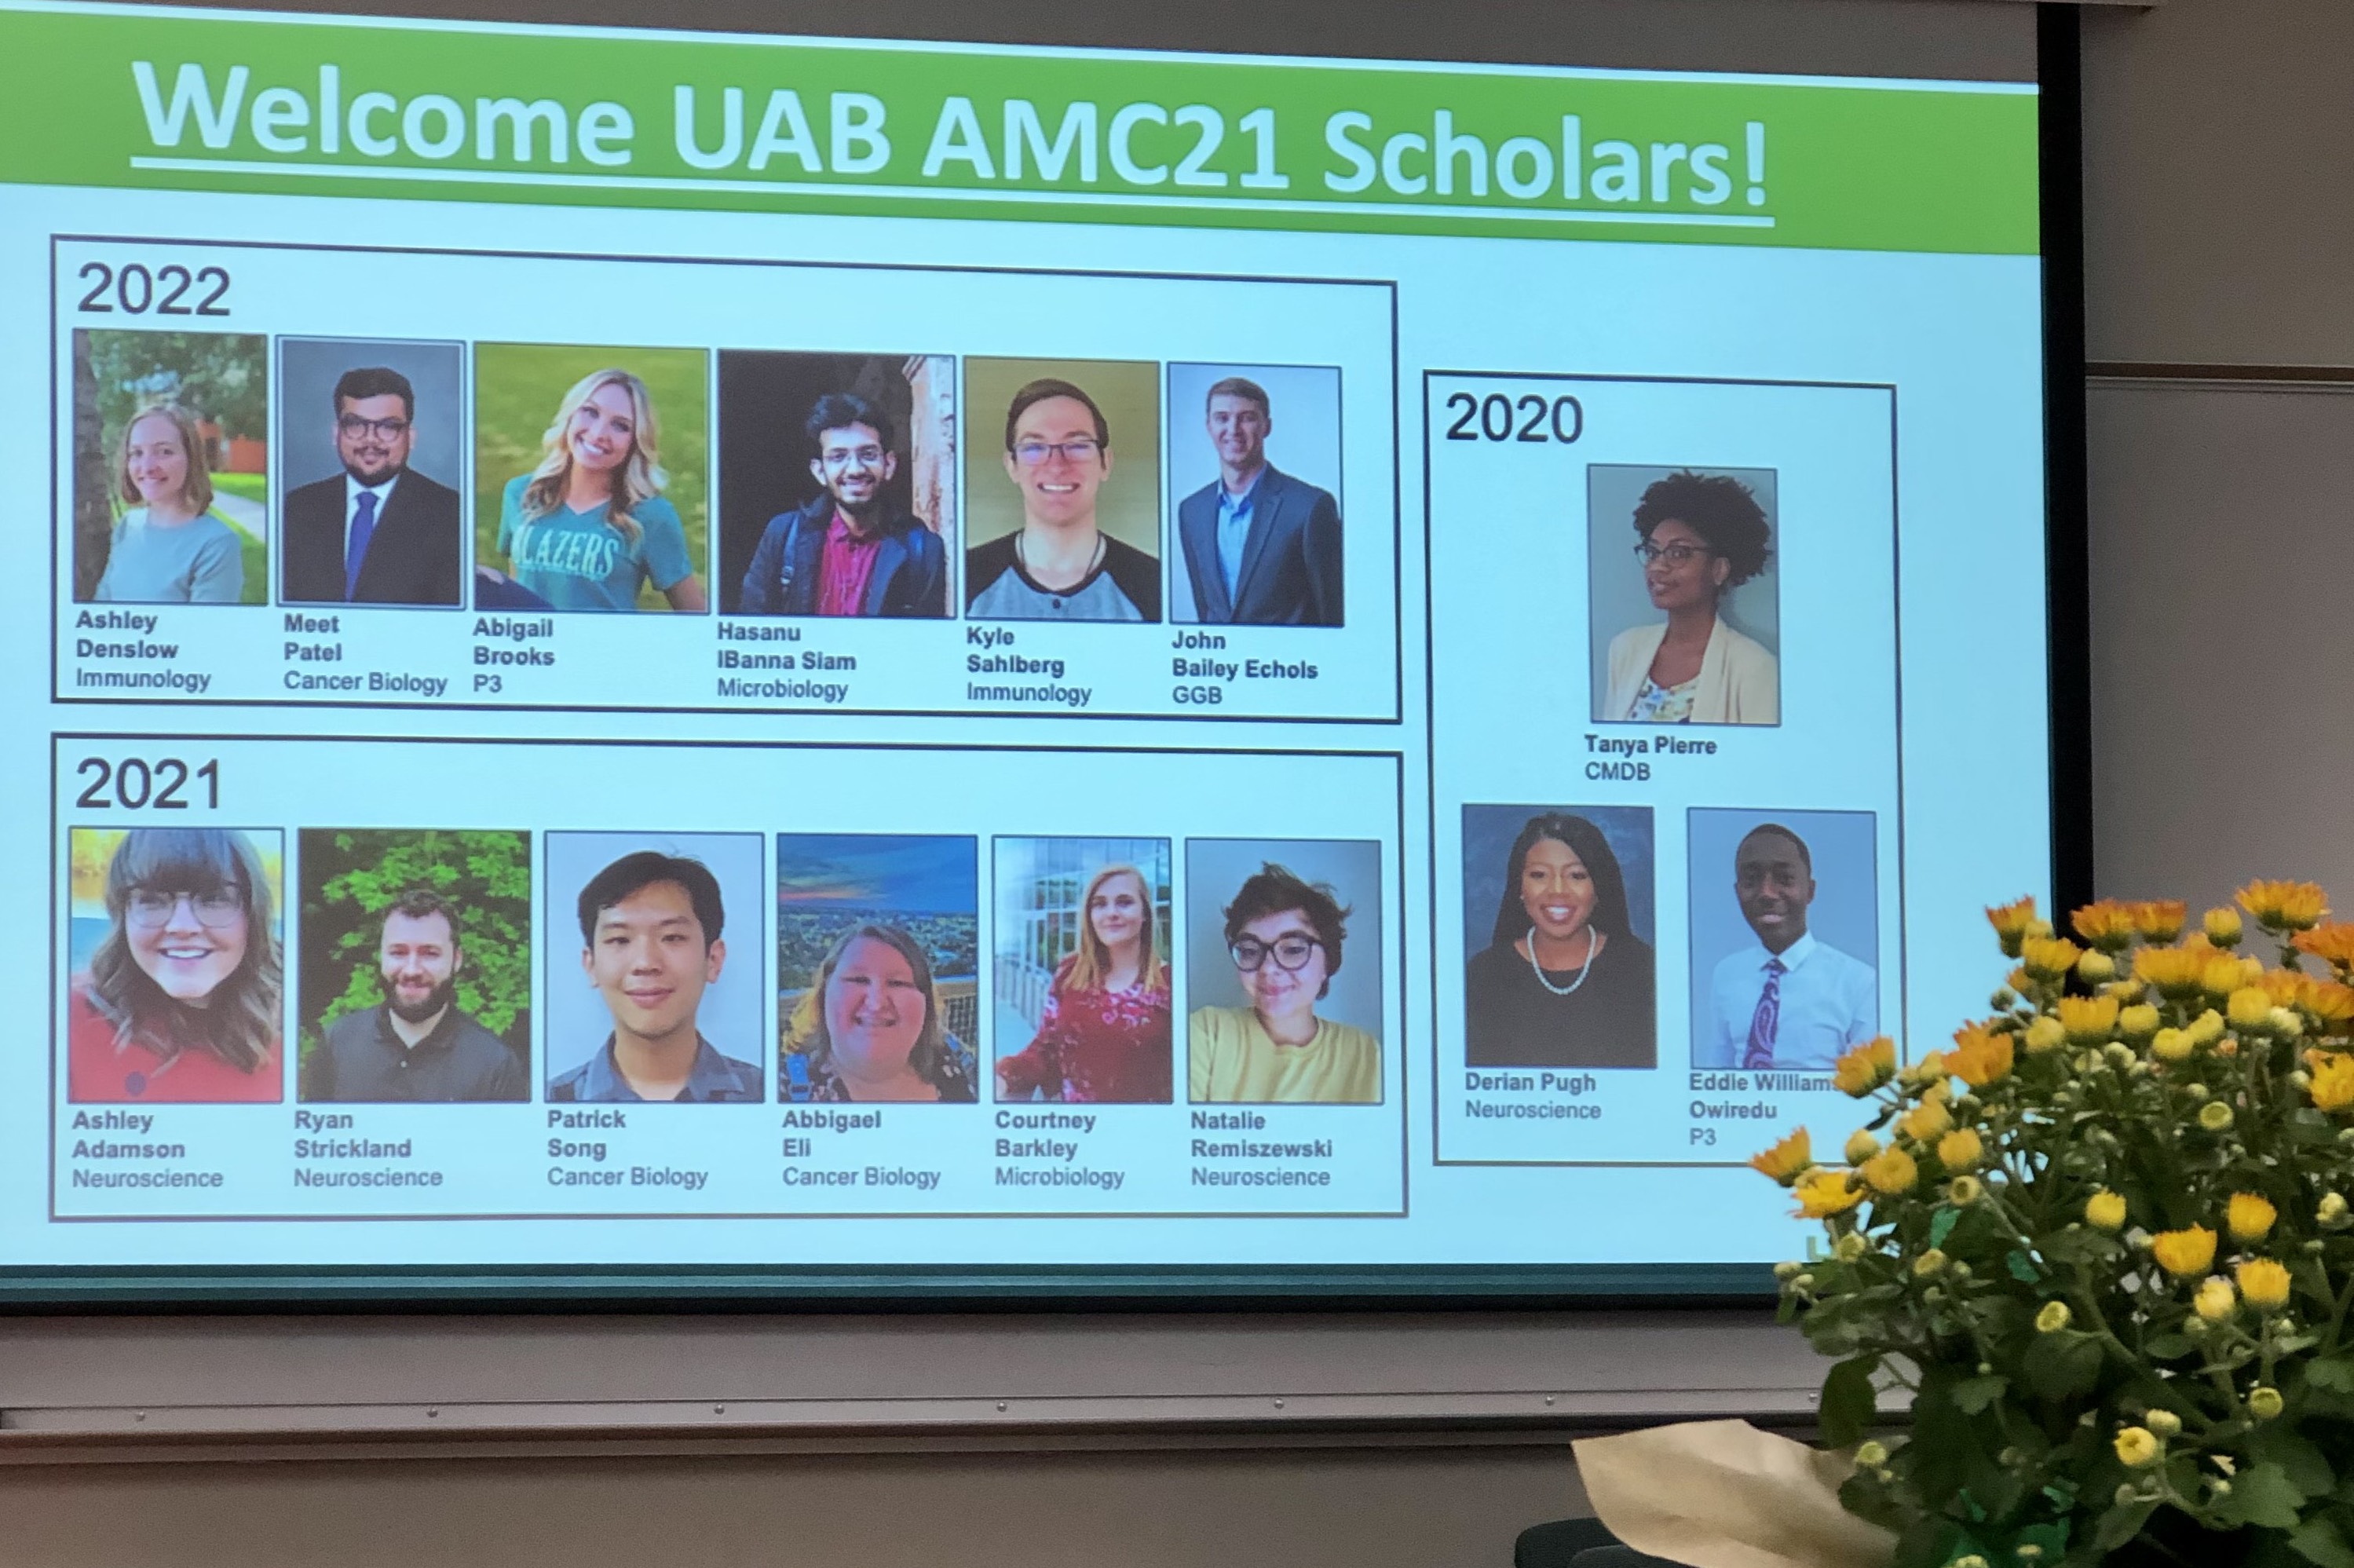 Welcome UAB AMC21 scholars